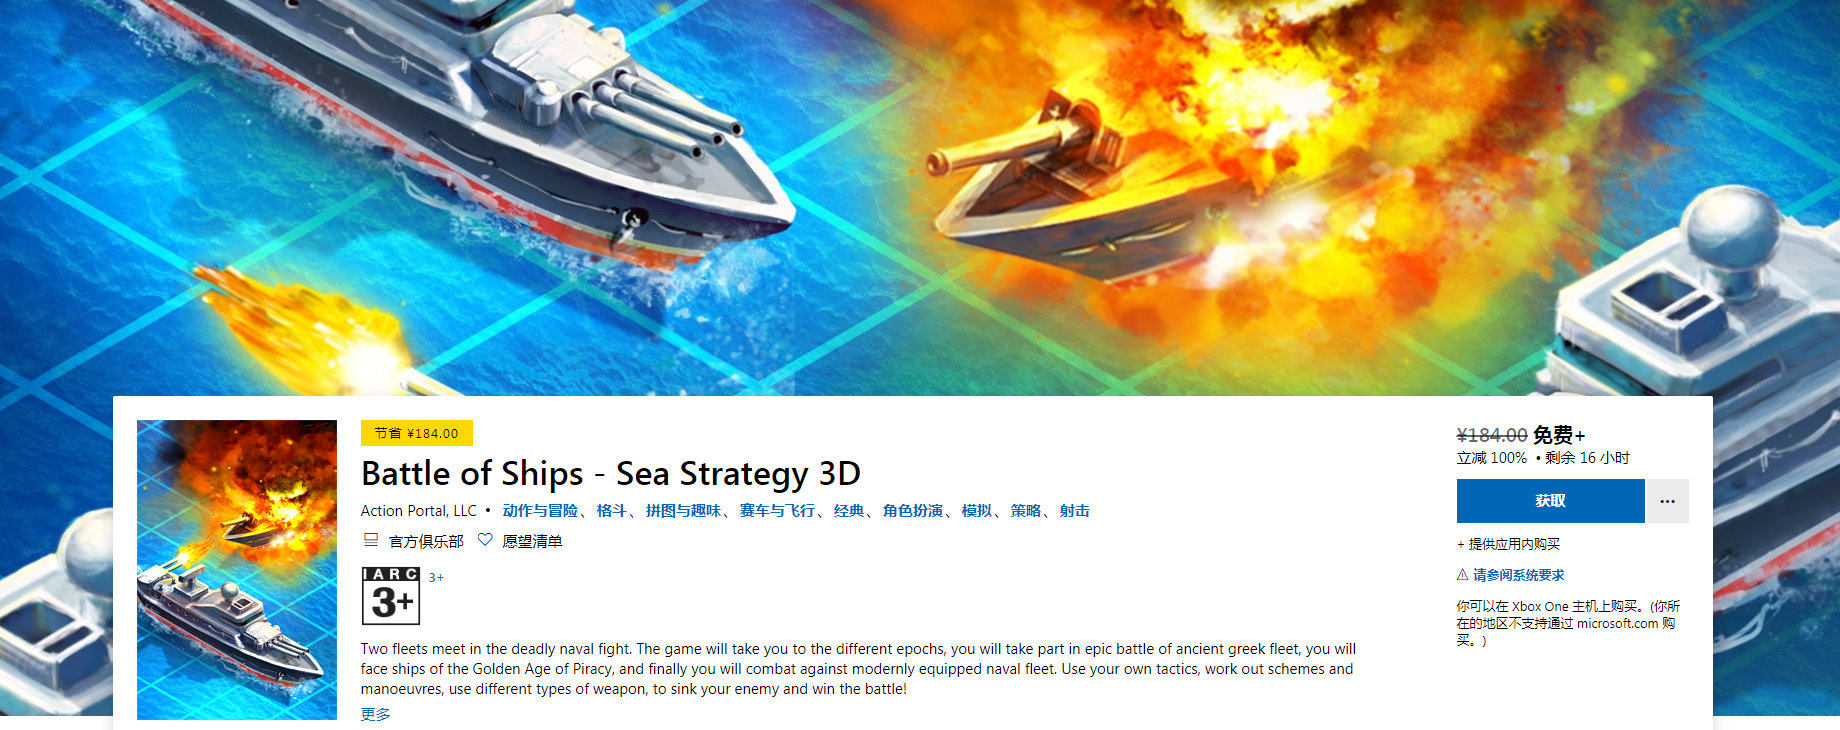 喜加一：微软商城免费领海战策略RPG《 Battle of Ships》